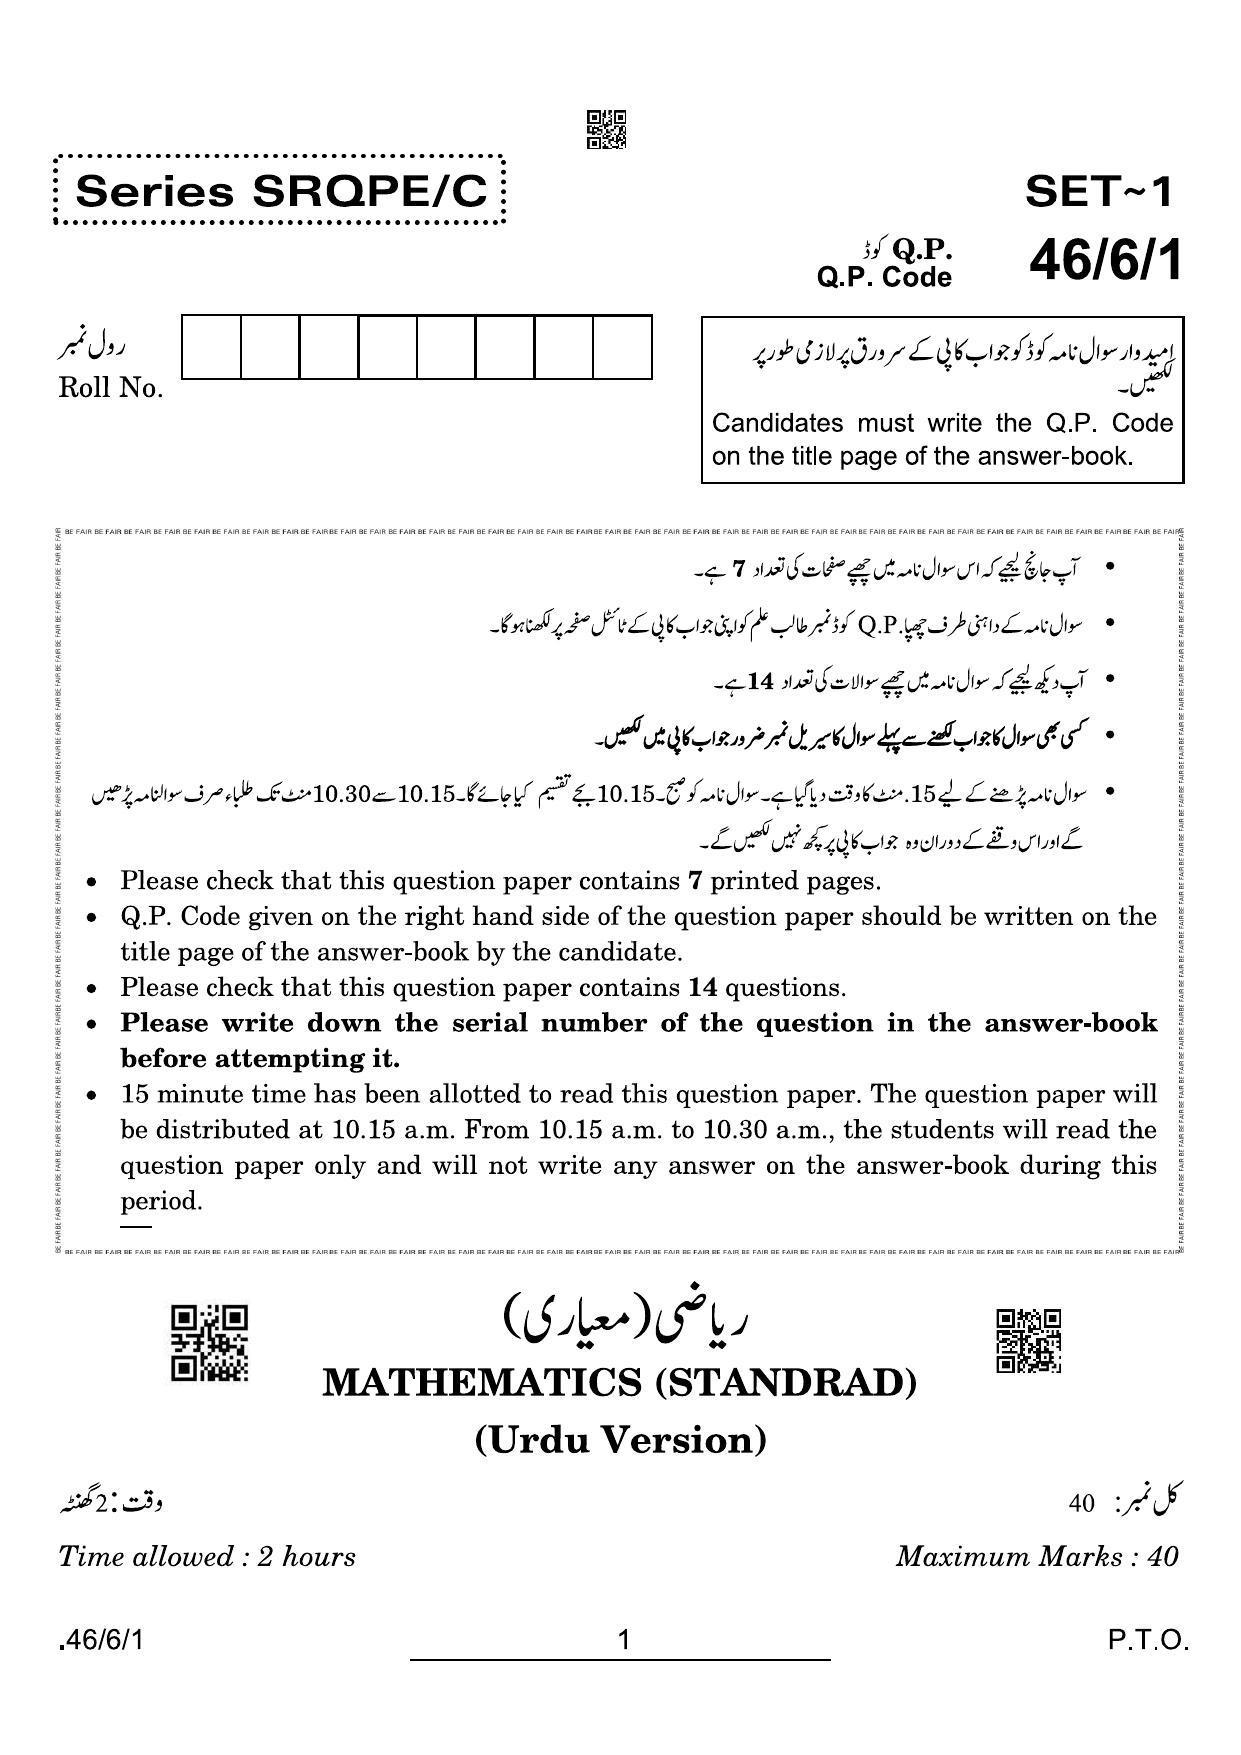 CBSE Class 10 46-6-1 Maths Standard Urdu 2022 Compartment Question Paper - Page 1